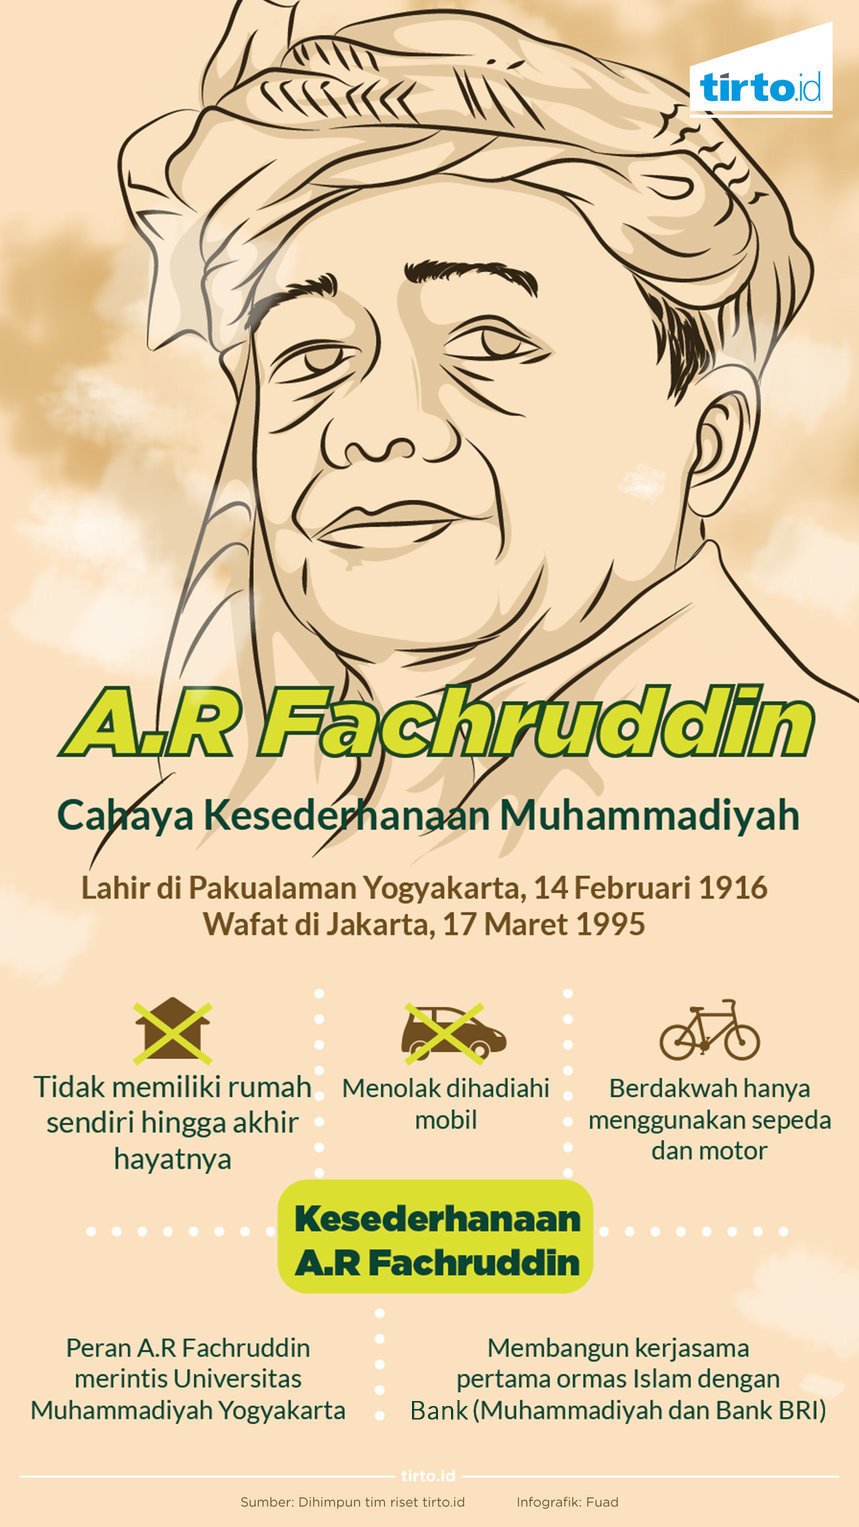 A.R Fachruddin Cahaya Kesederhanaan Muhammadiyah - Tirto.ID